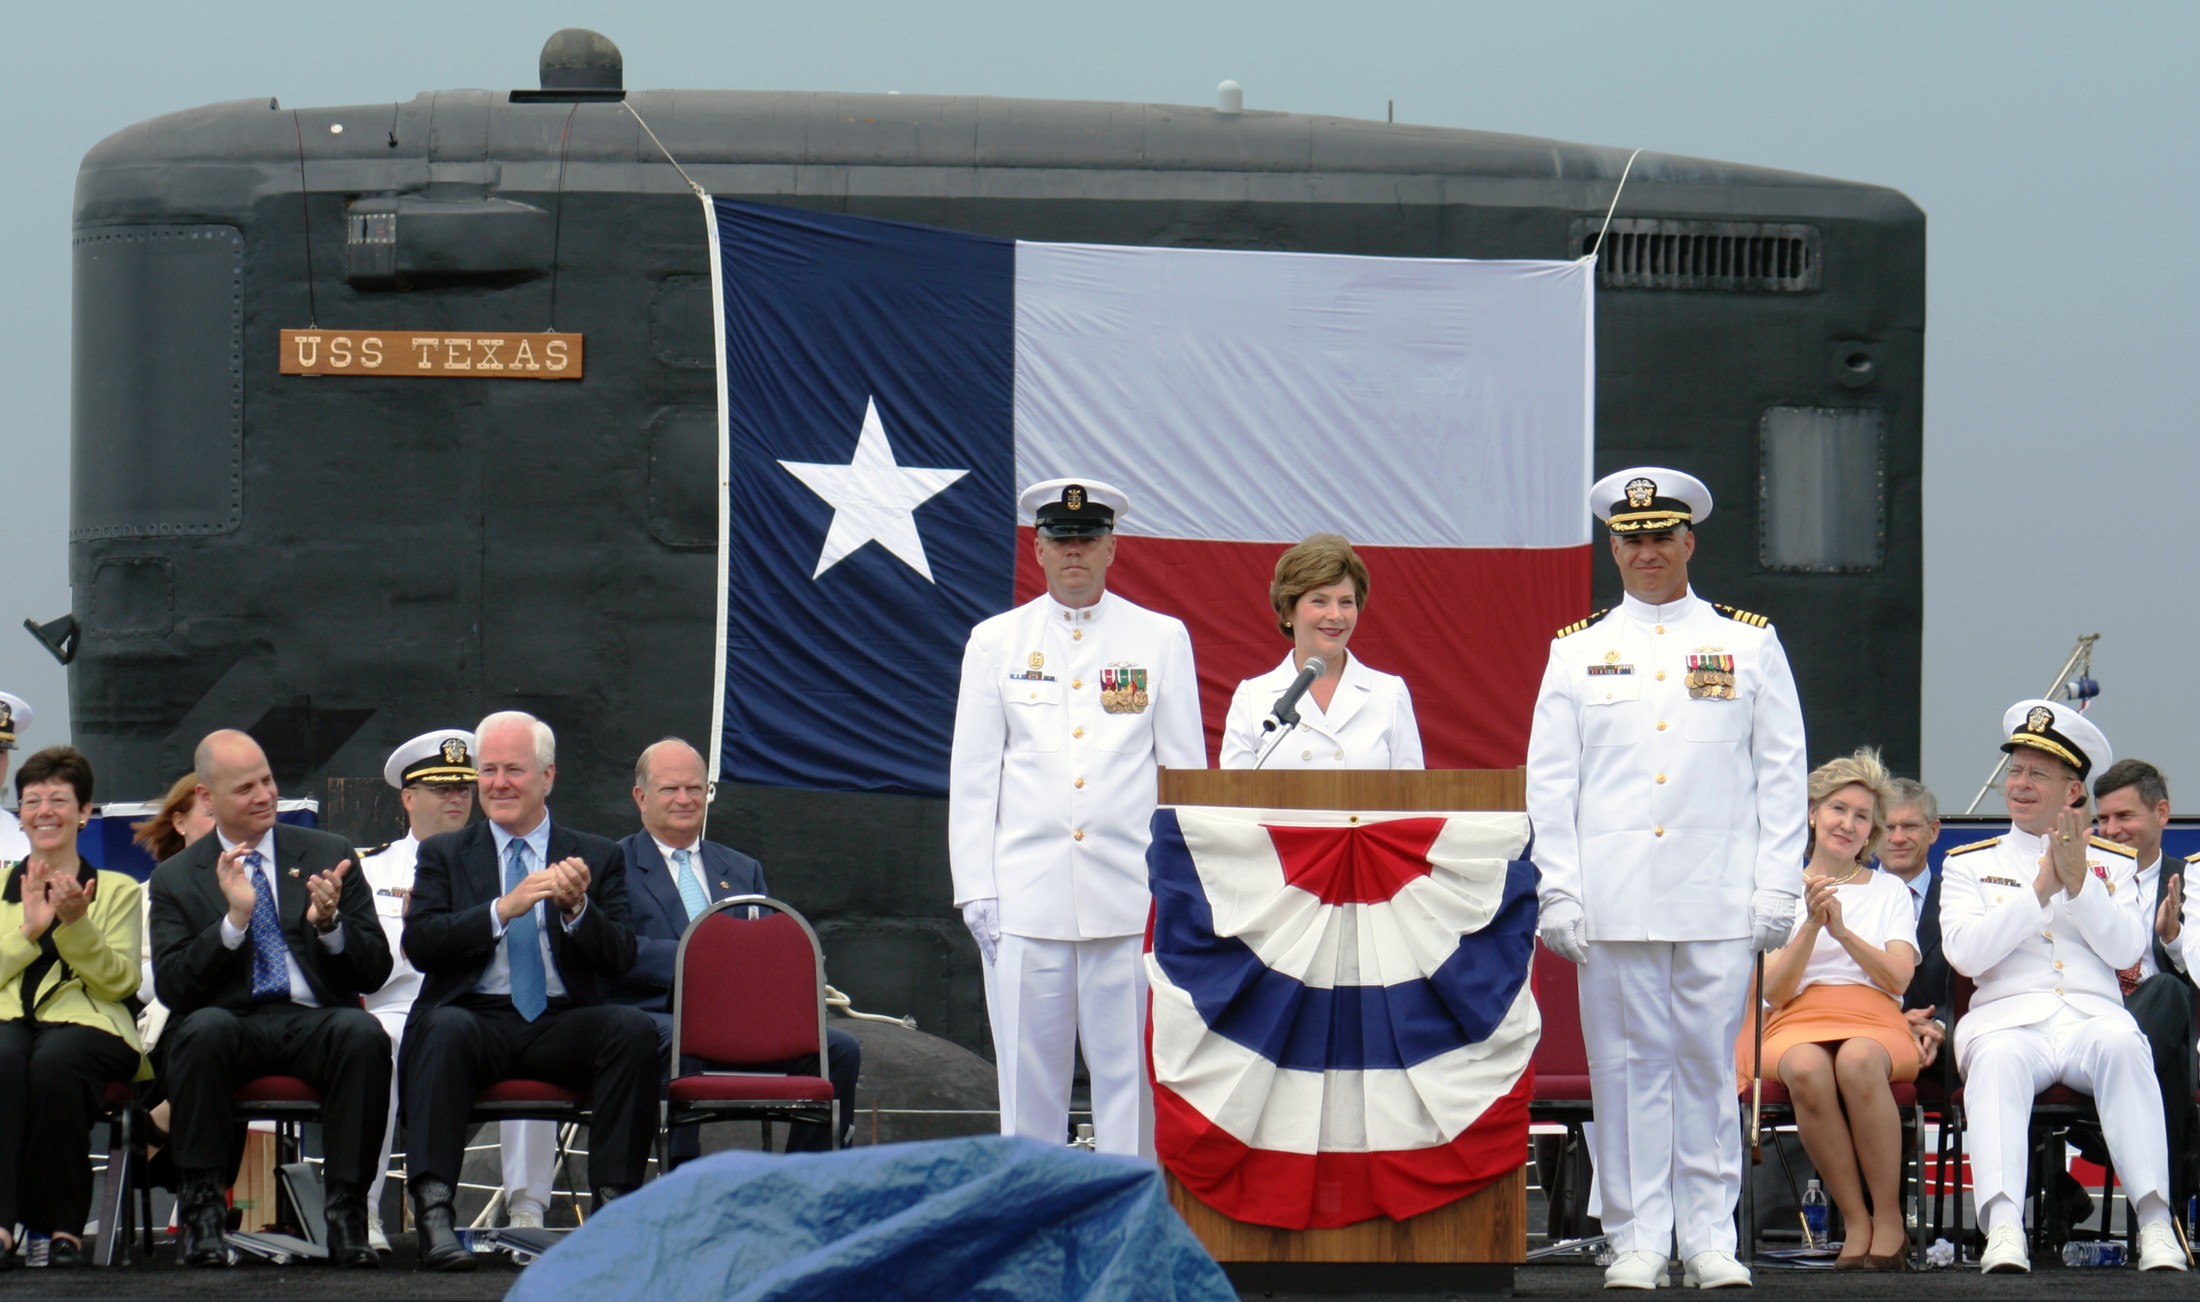 ssn-775 uss texas virginia class attack submarine navy 2006 36 commissioning ceremony laura bush